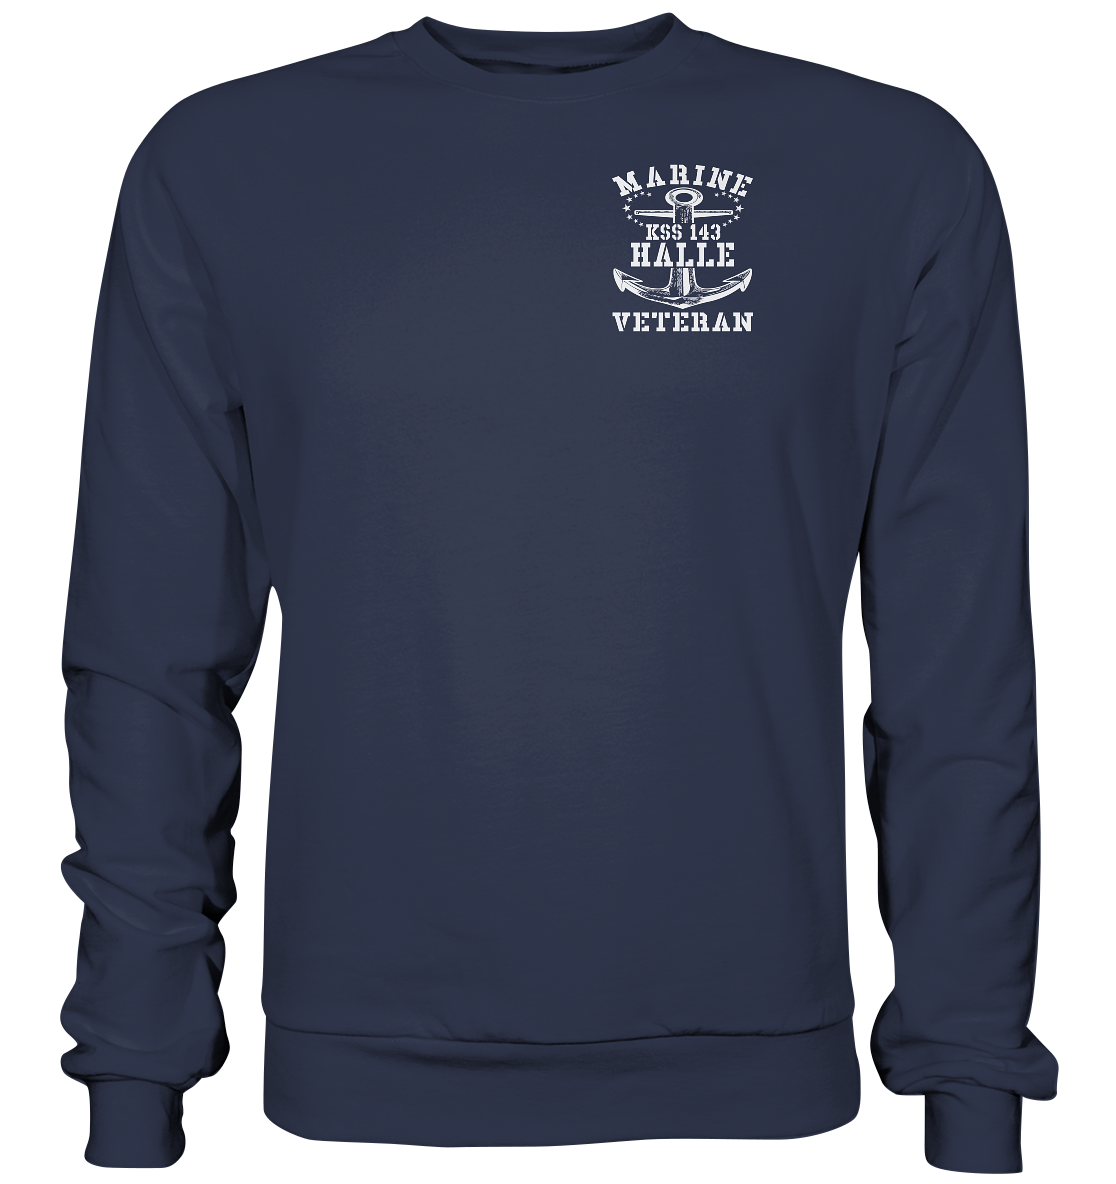 KSS 143 HALLE Marine Veteran Brustlogo - Premium Sweatshirt